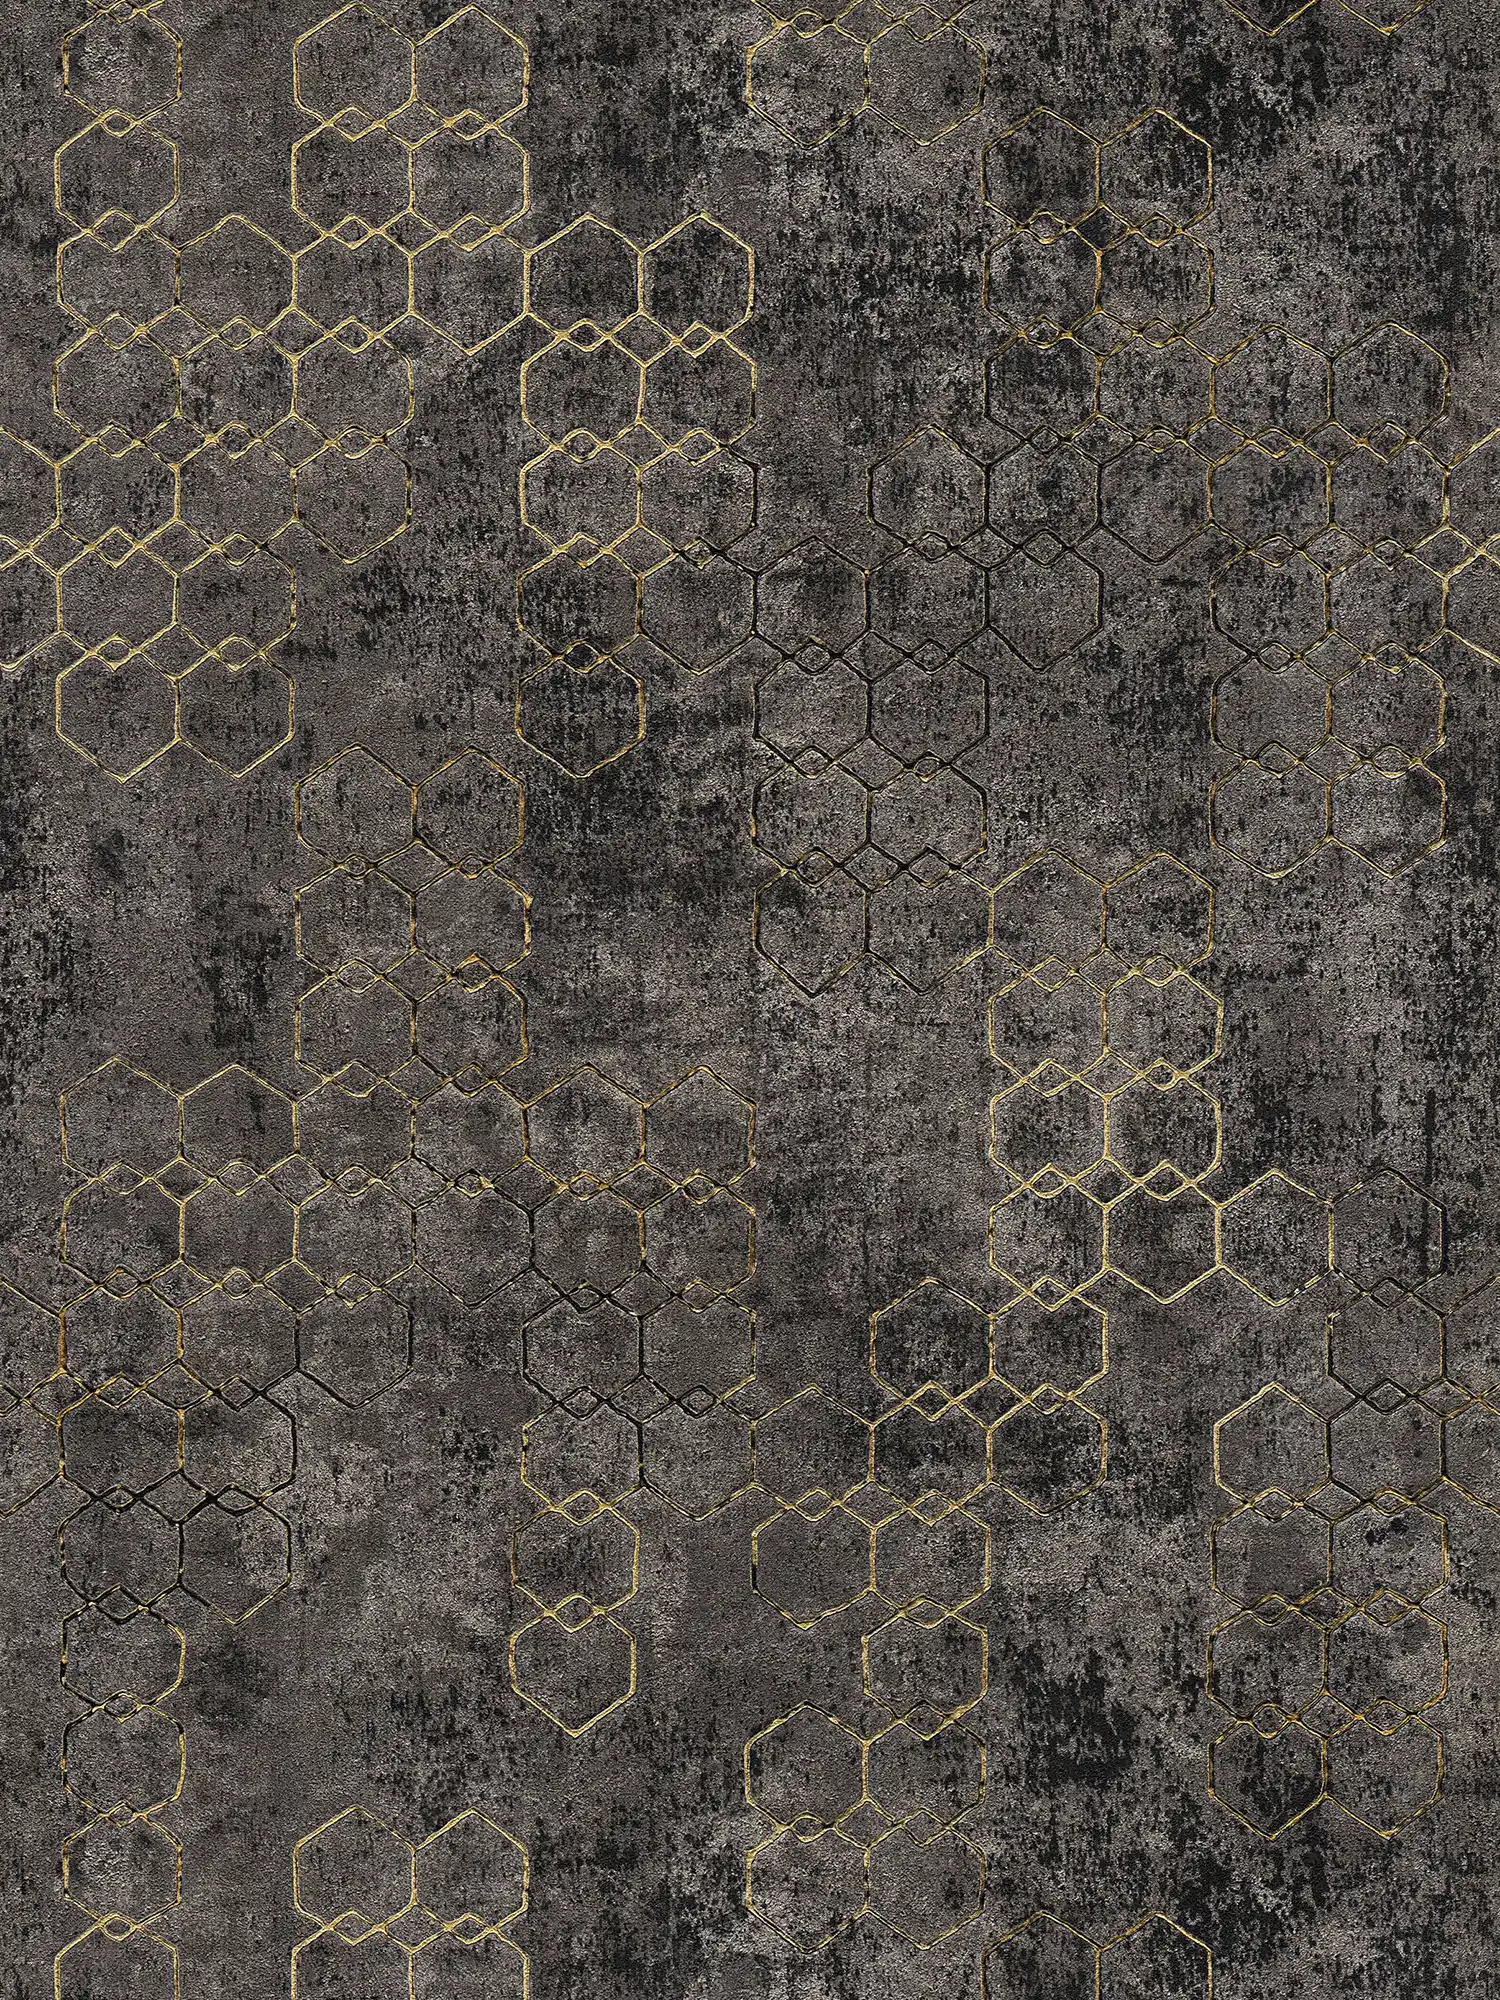 Wallpaper modern design gold & concrete effect - black, gold
